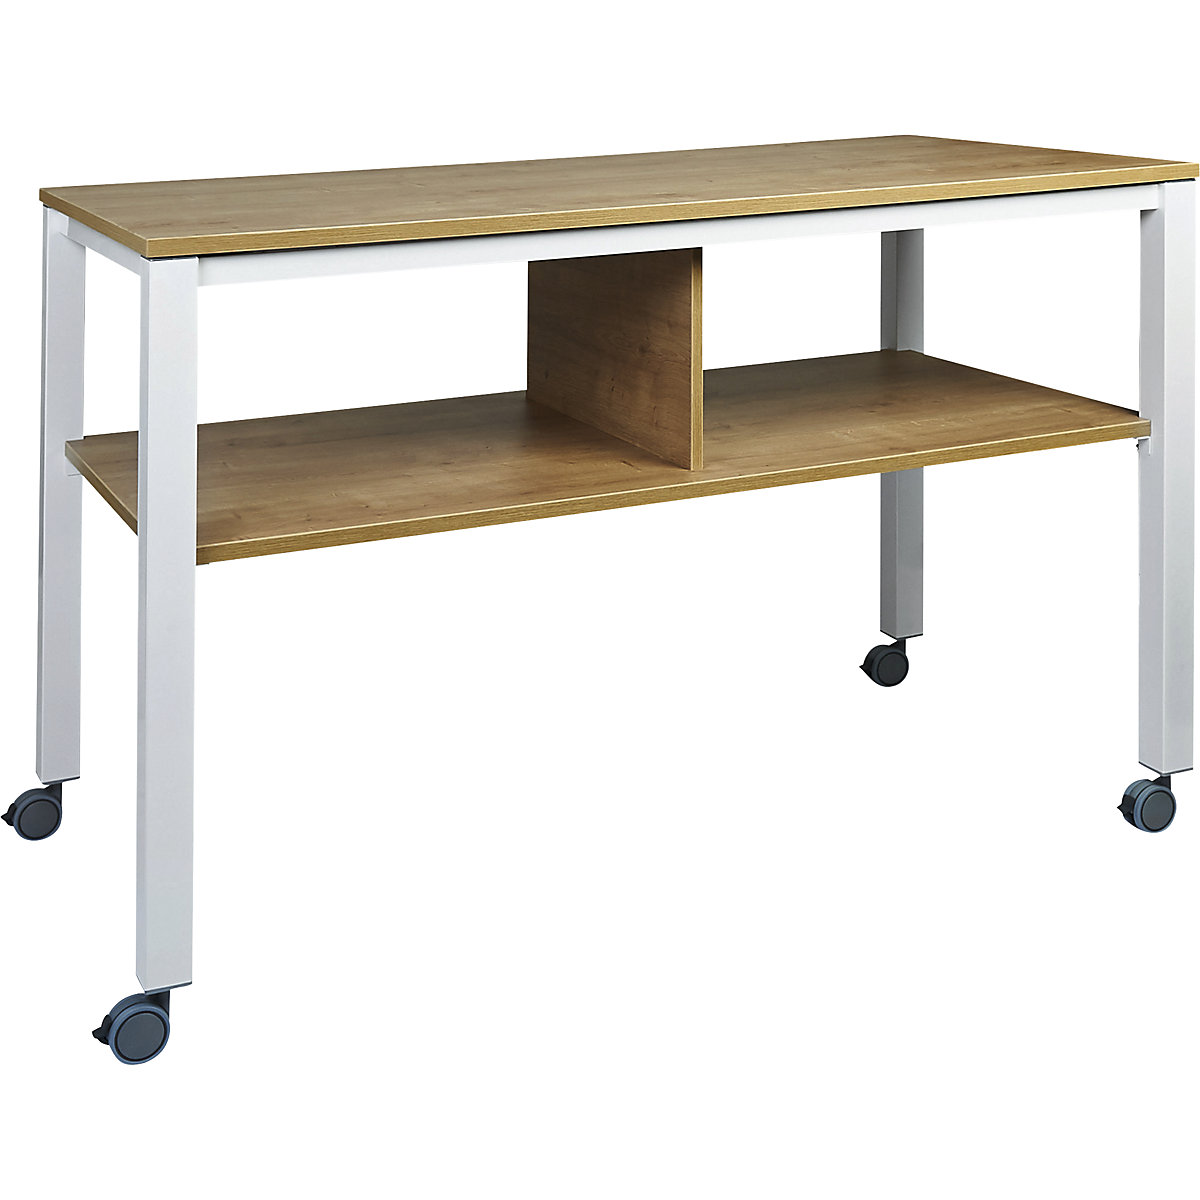 E2008 multifunctional table, mobile, frame in white, worktop in oak finish-9